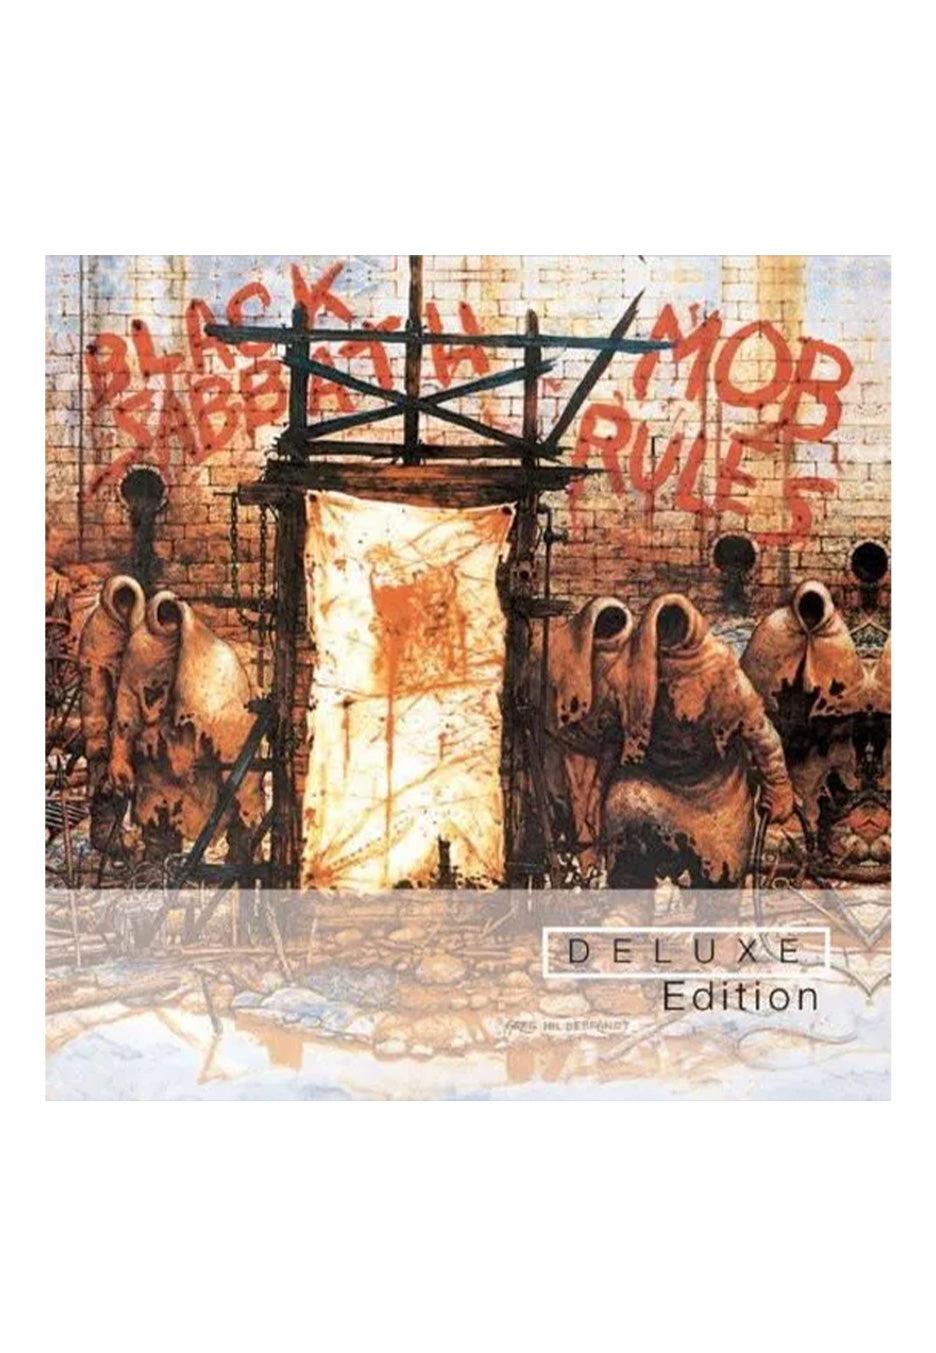 Black Sabbath - Mob Rules (Deluxe Edition) - 2 CD